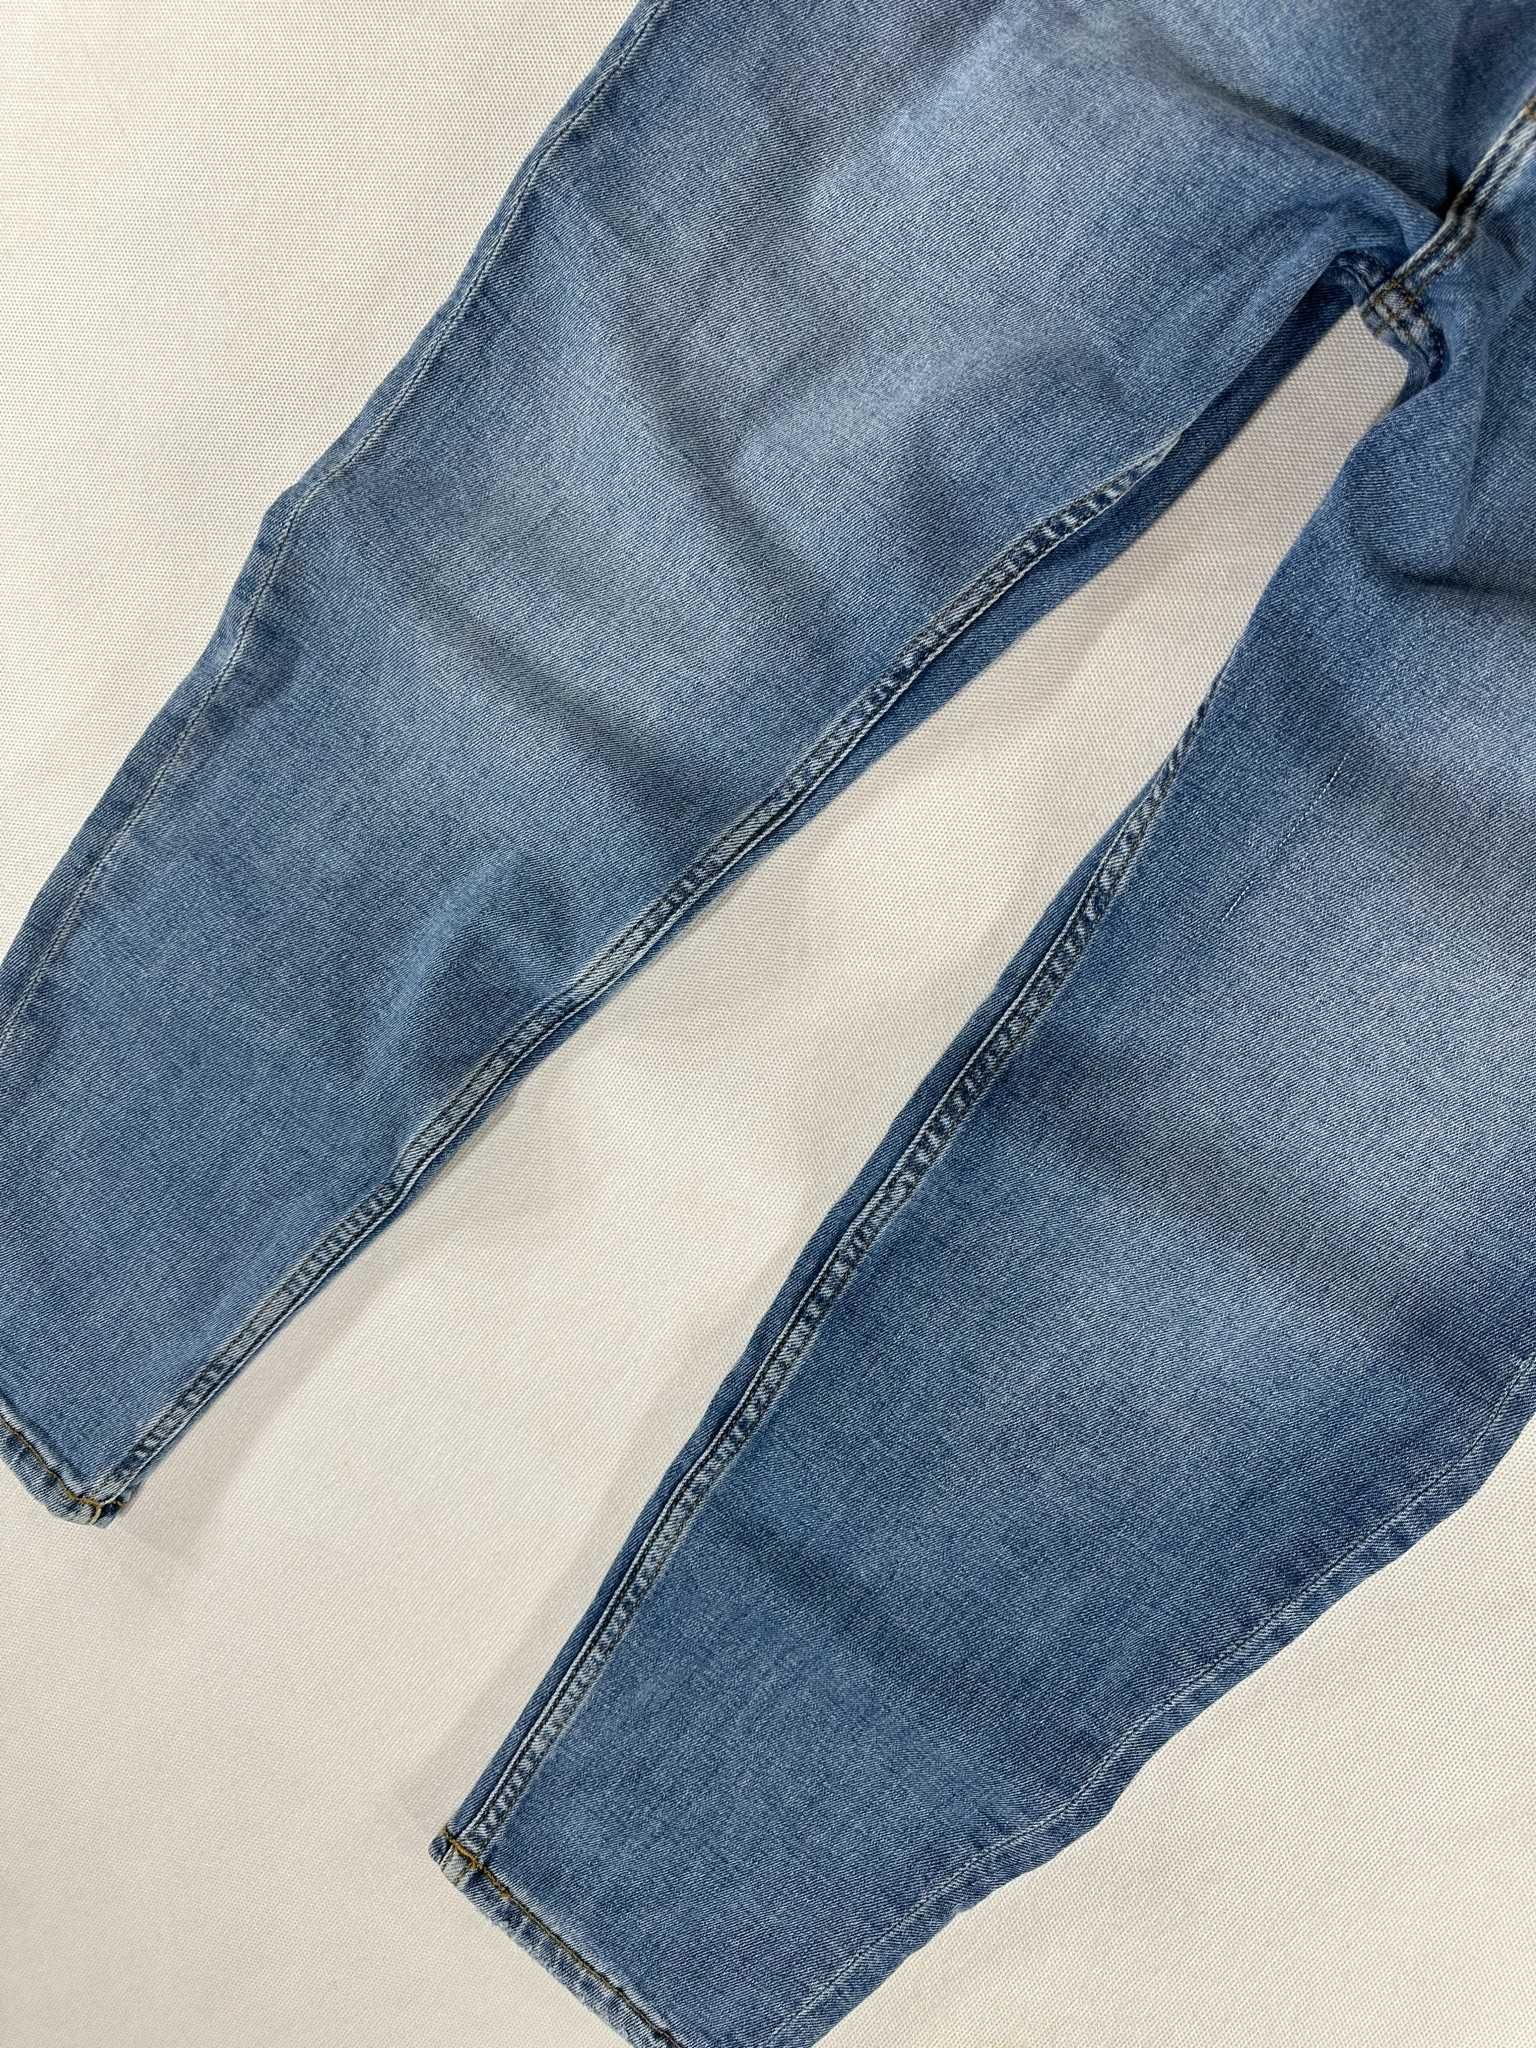 HOUSE jeans carrot fit medium blue W34L32 96cm